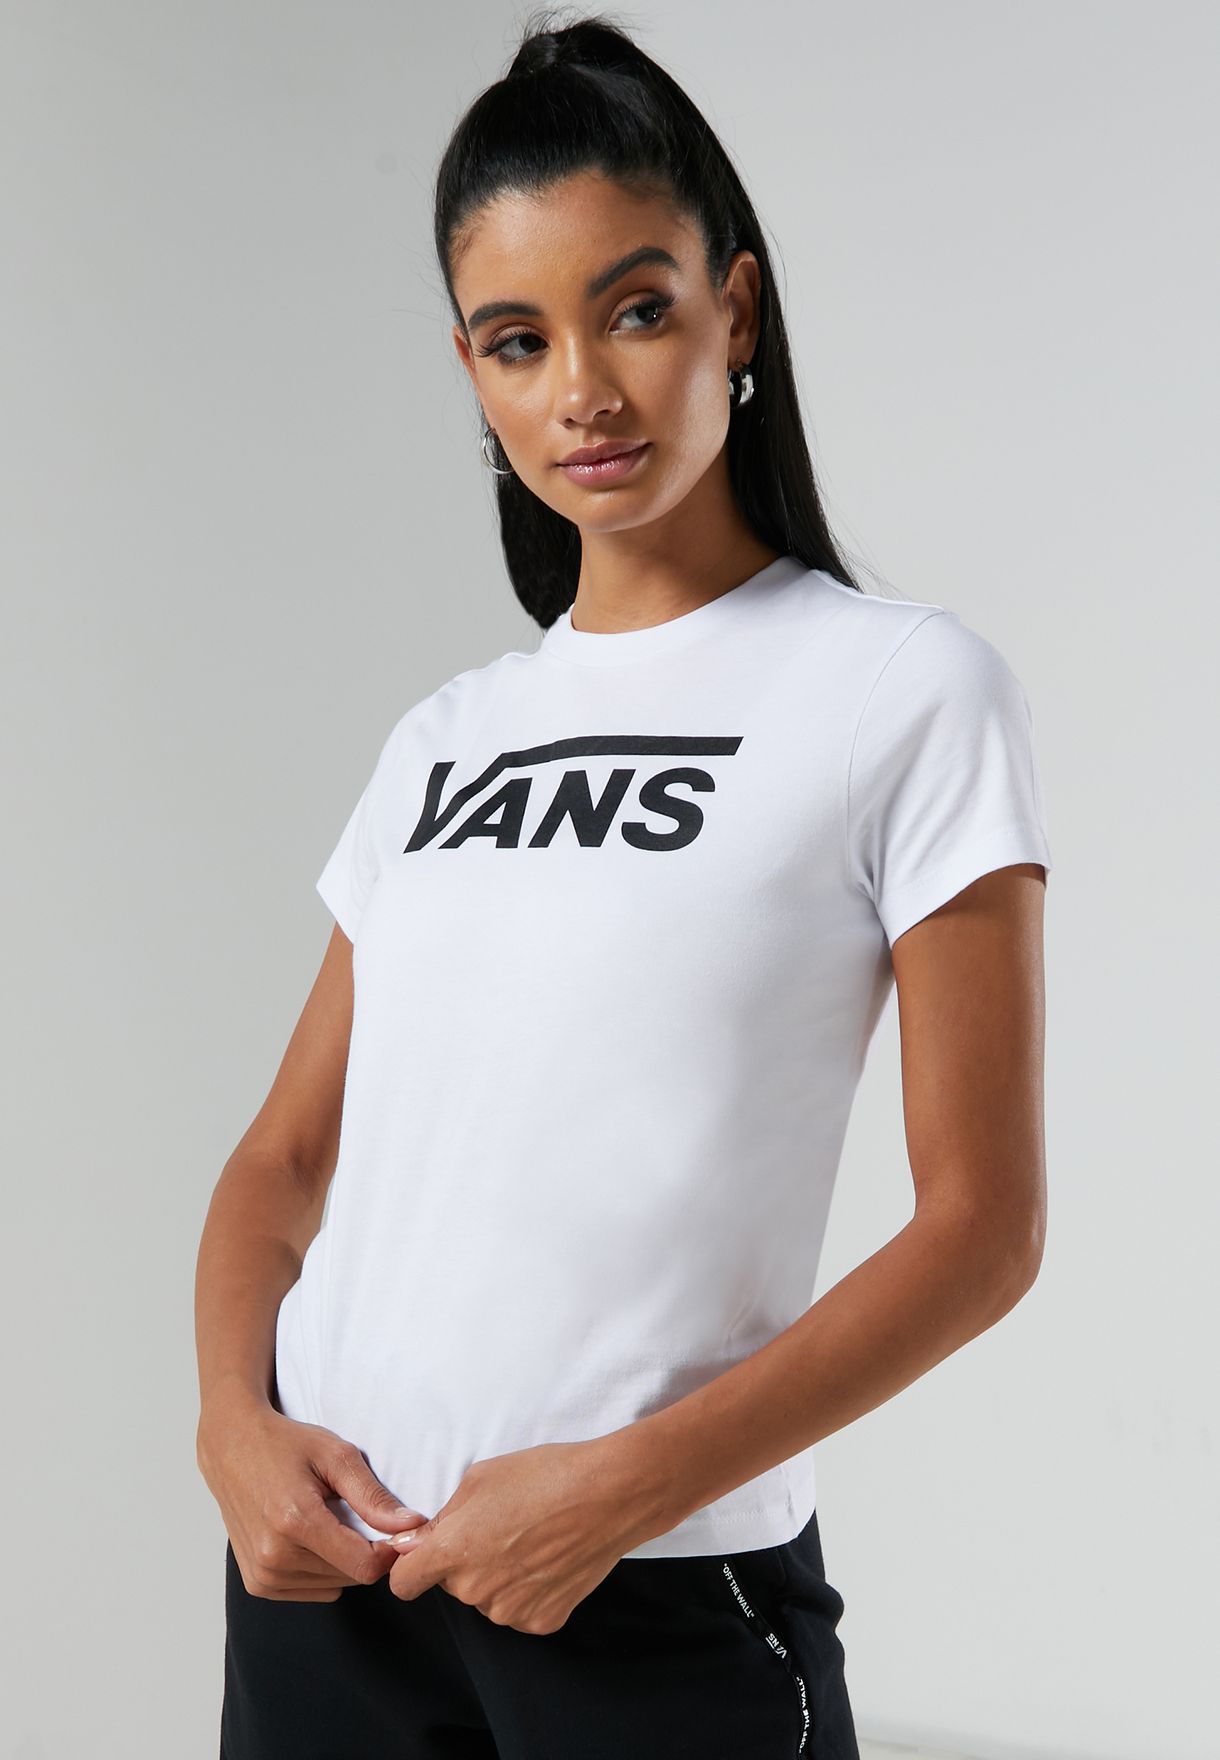 womens vans t shirt sale